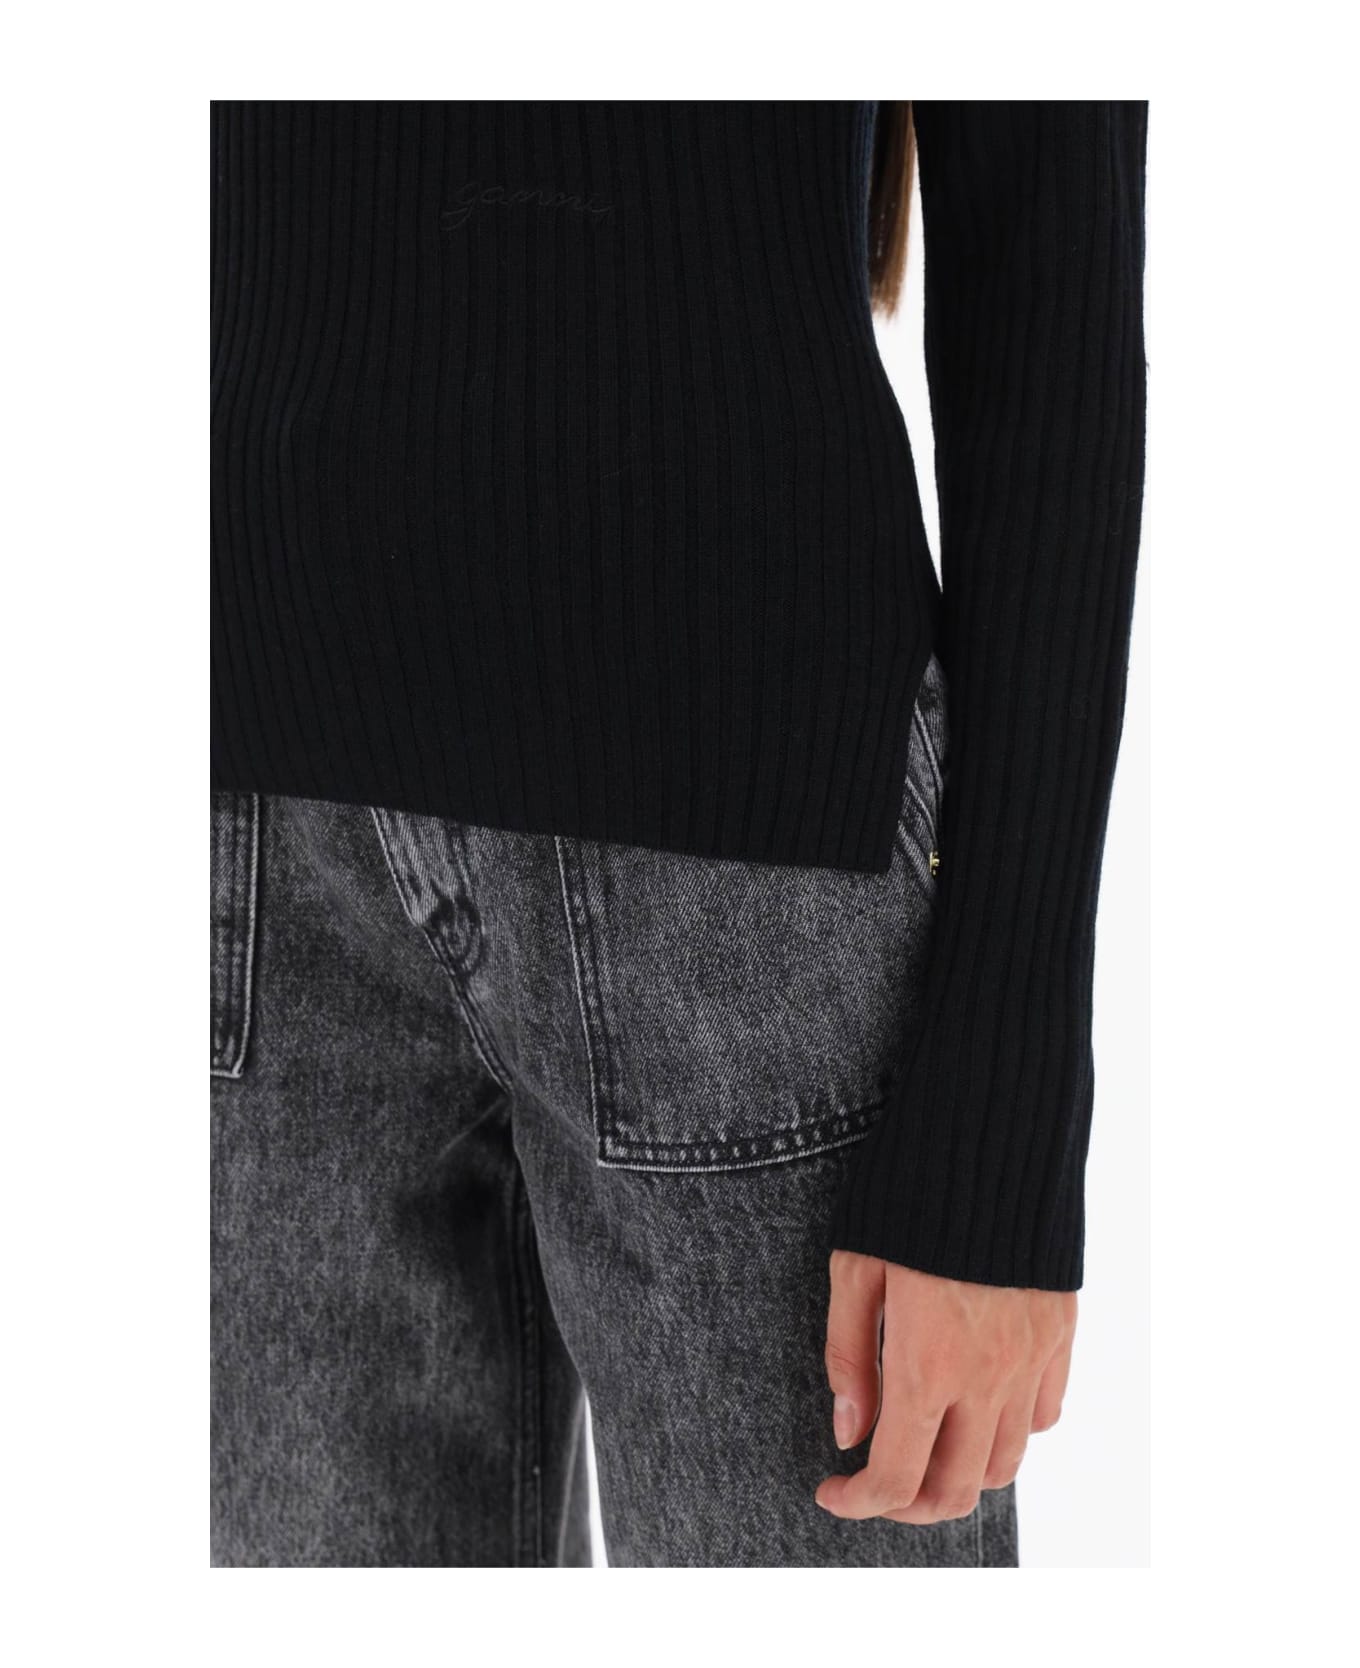 Ganni Turtleneck Sweater With Back Cut Out - BLACK (Black)